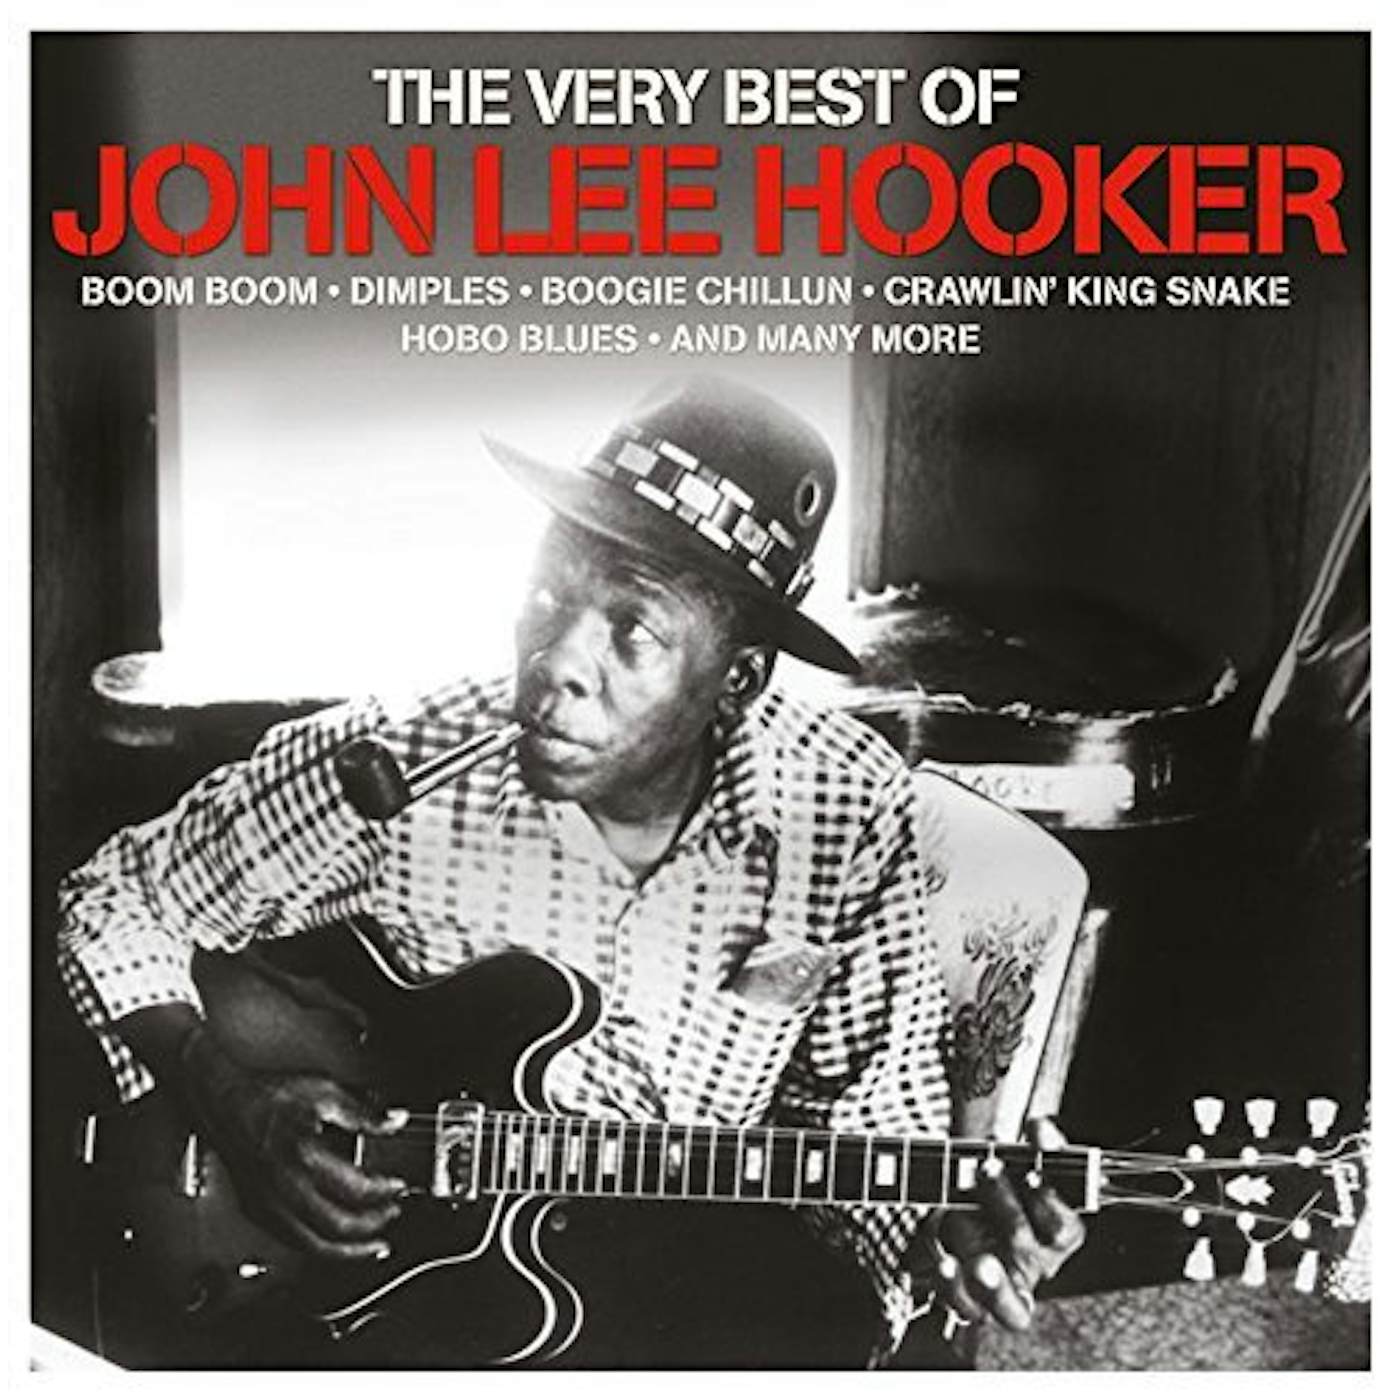 John Lee Hooker VERY BEST OF Vinyl Record